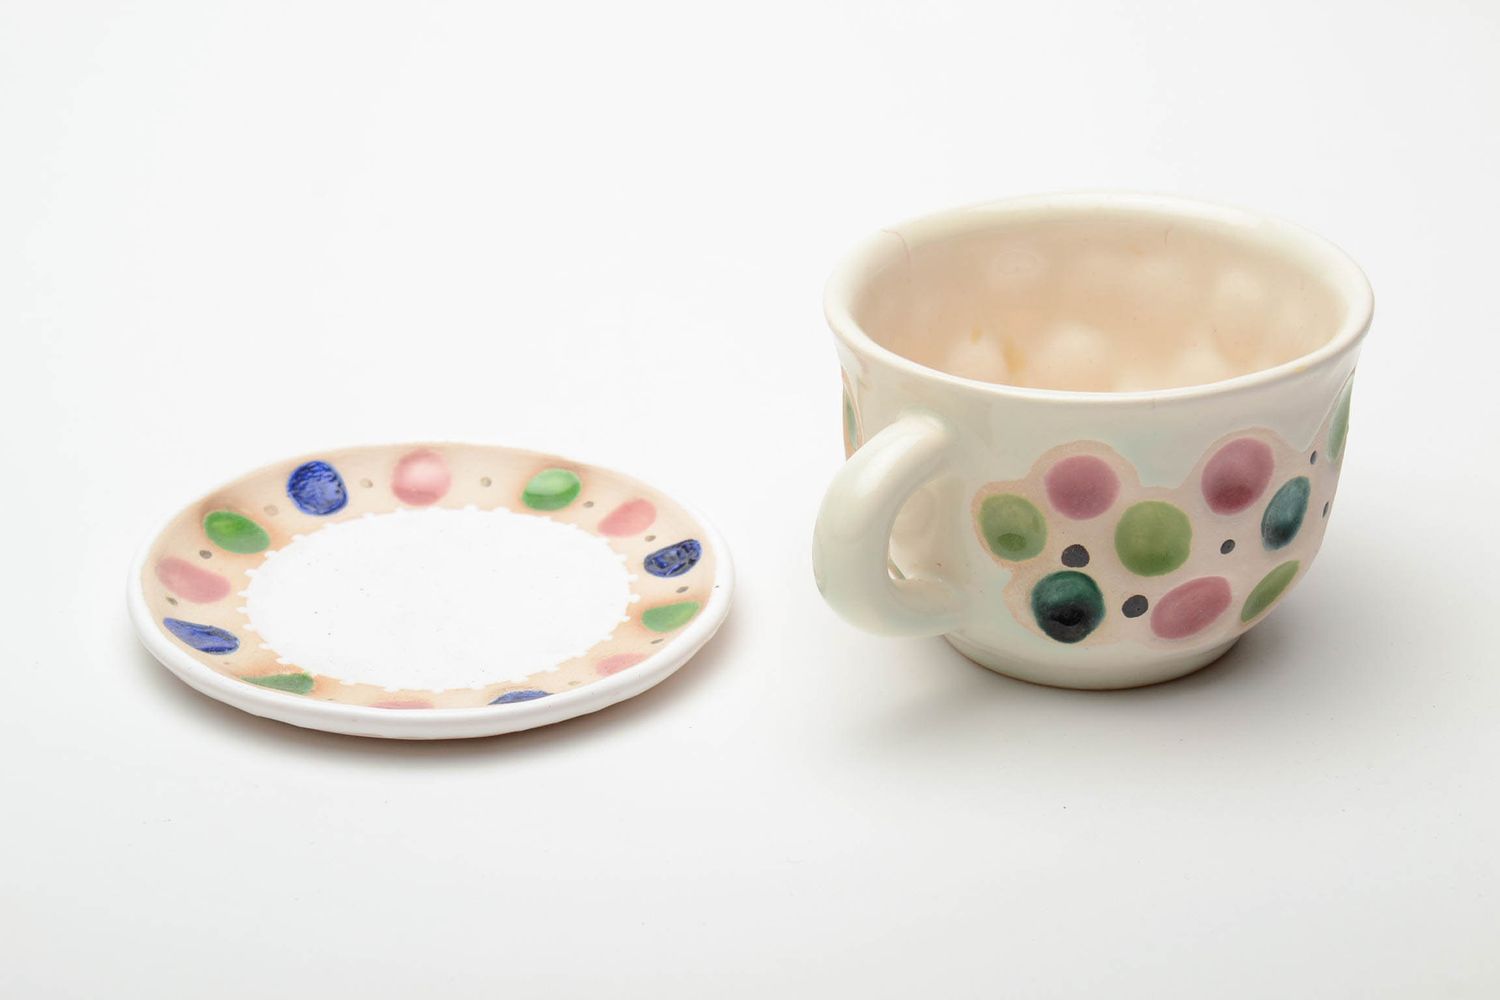  Espresso coffee ceramic cup and saucer 0,63 lb photo 3